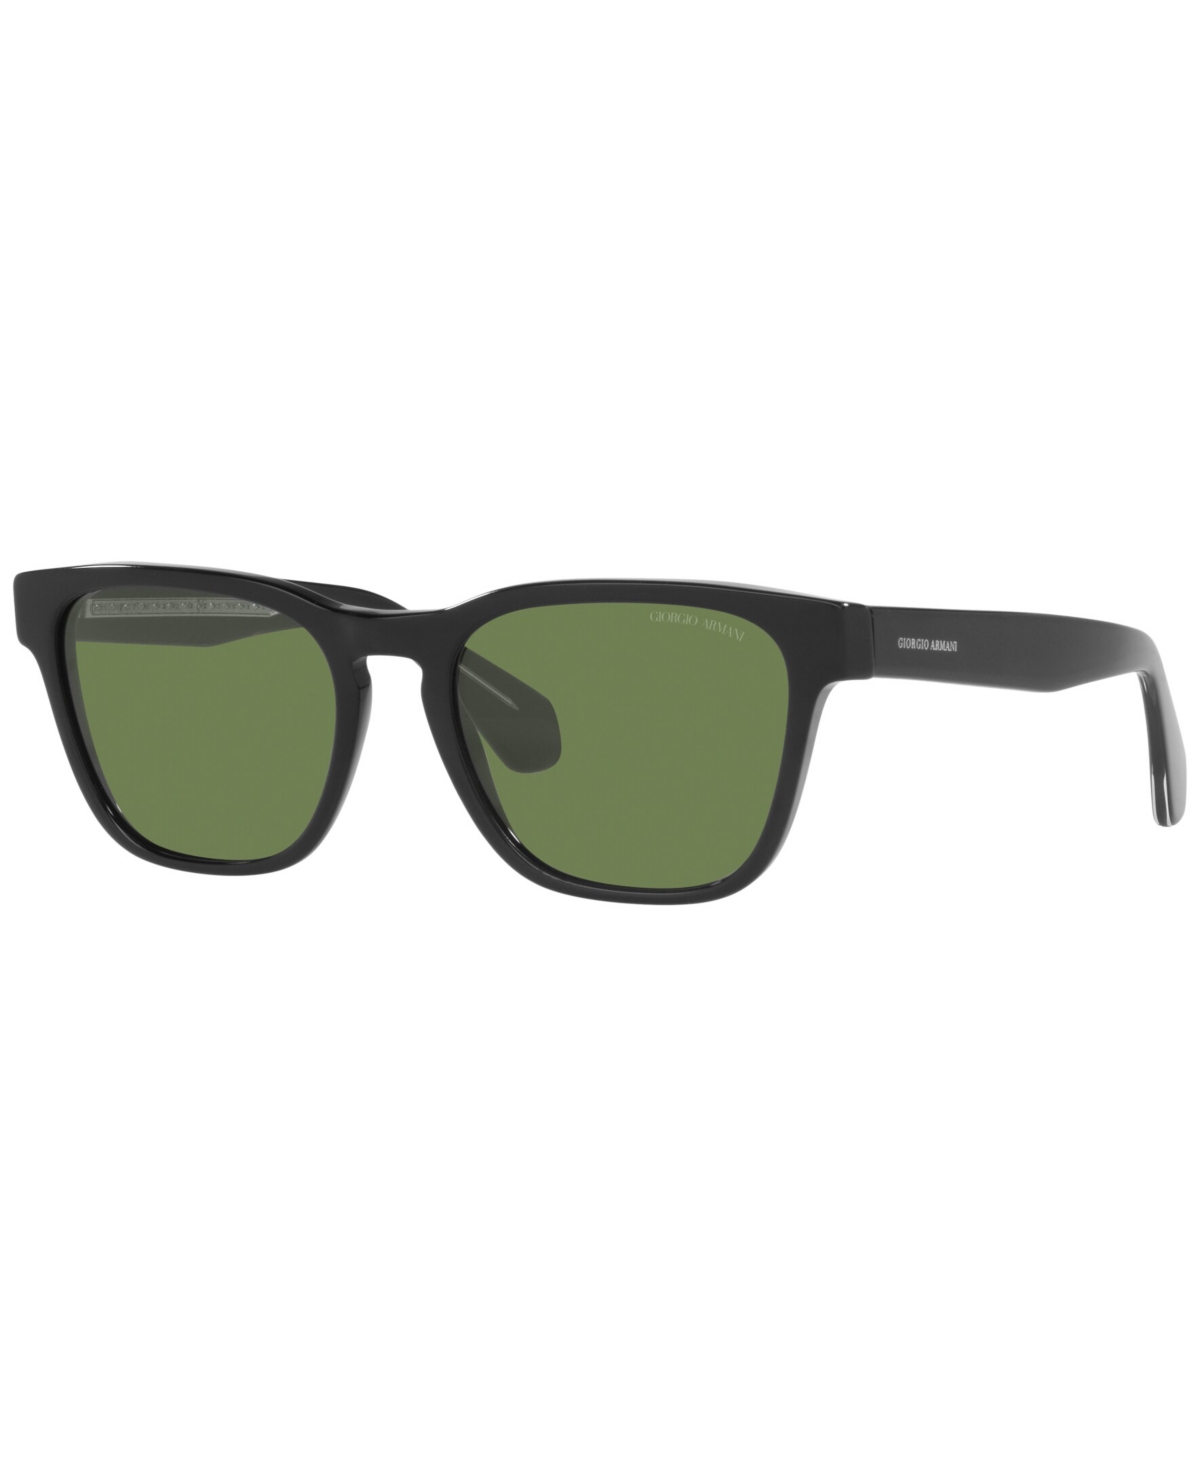 Men's Sunglasses, AR8155 55 - Black